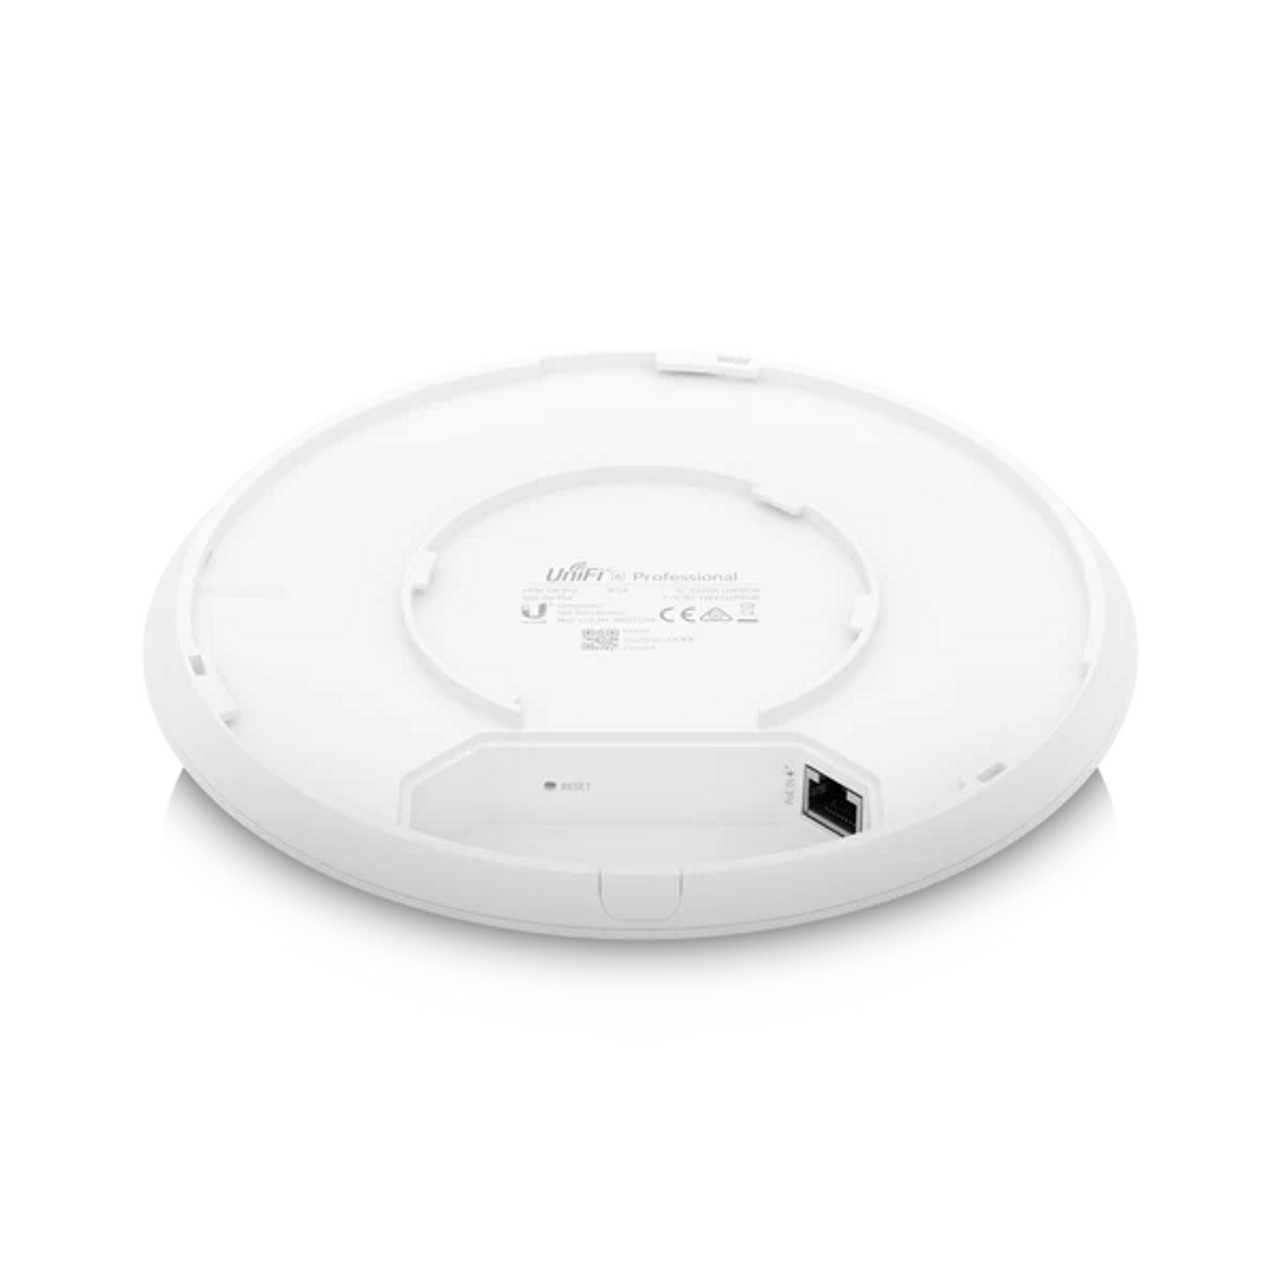 Ubiquiti U6-Pro-US Indoor Wireless Access Pro WiFi Point 6